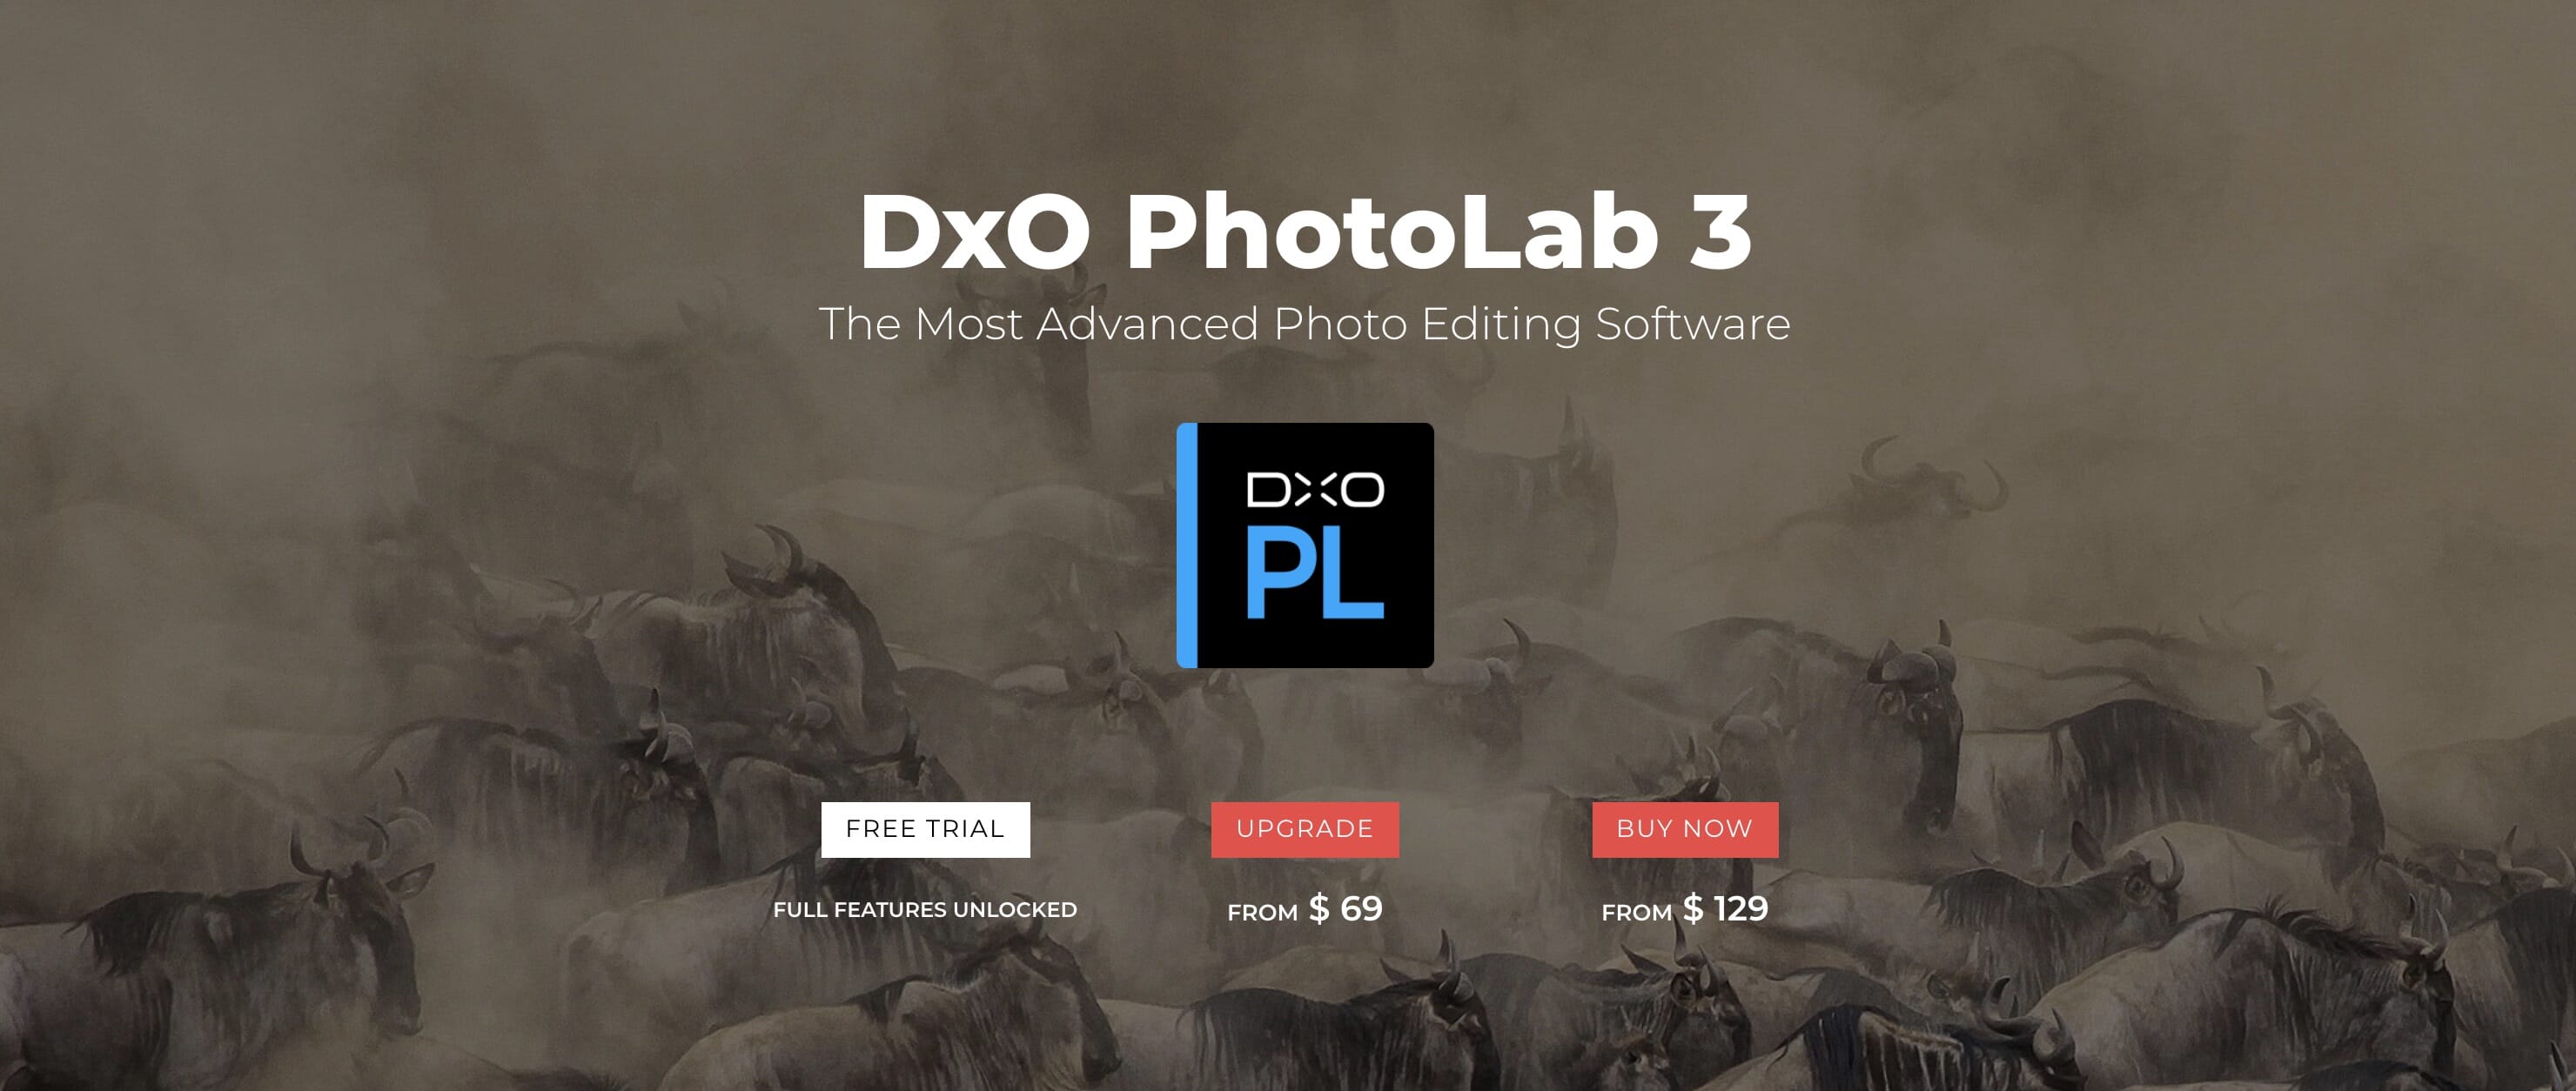 dxo photolab 3 elite edition